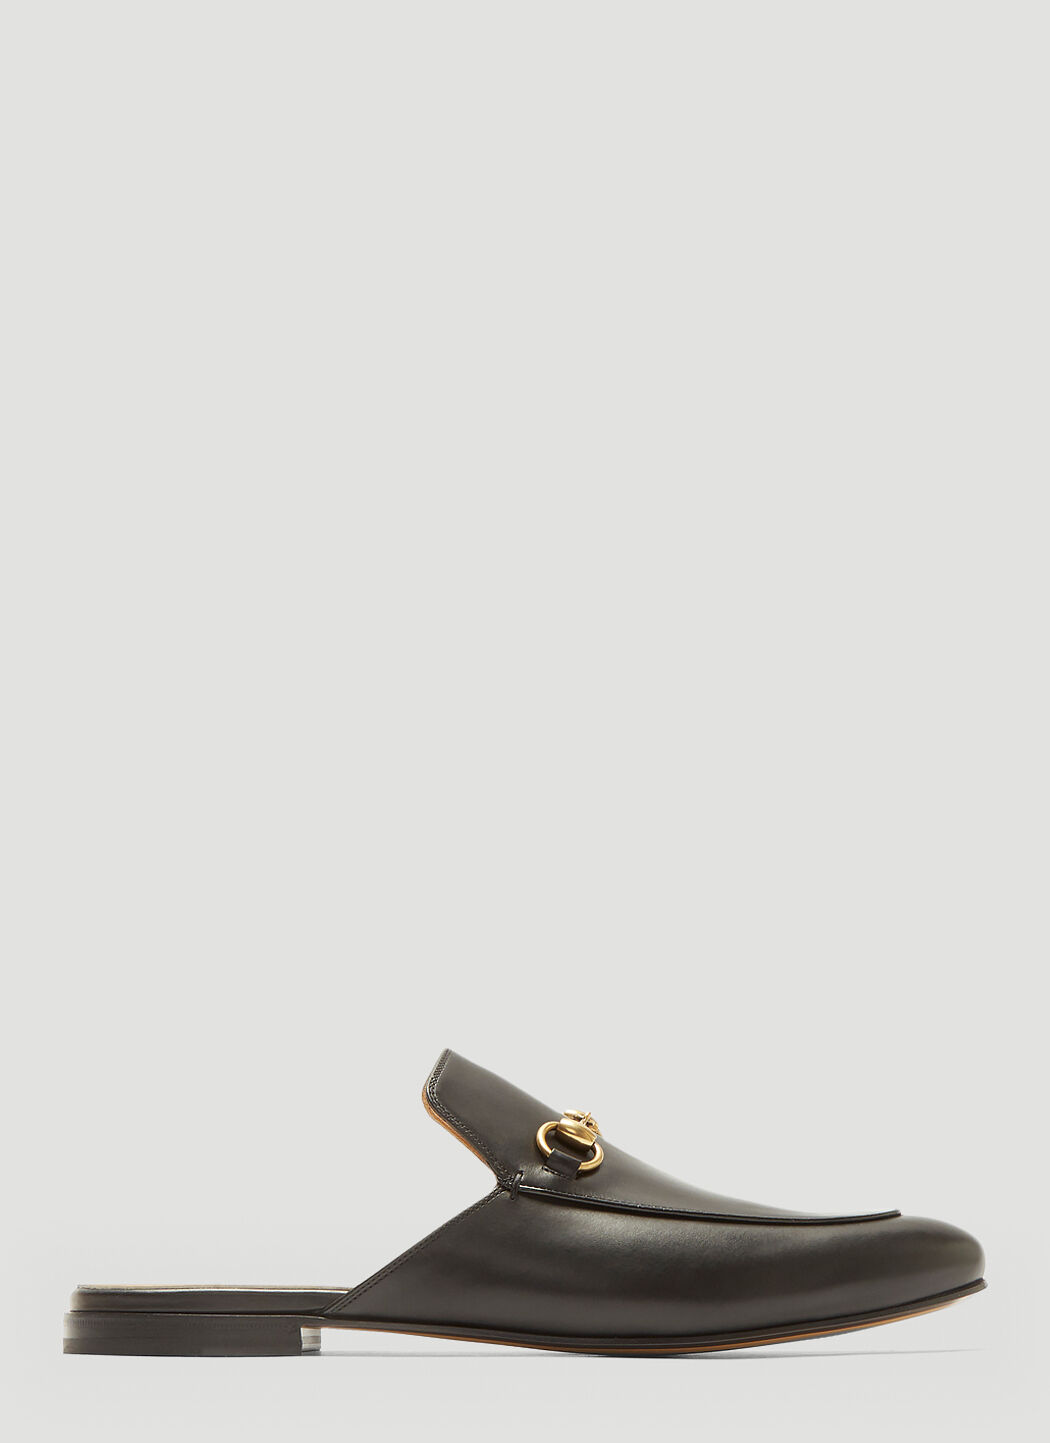 Saint Laurent Horsebit Leather Slipper Shoes Black sla0235028